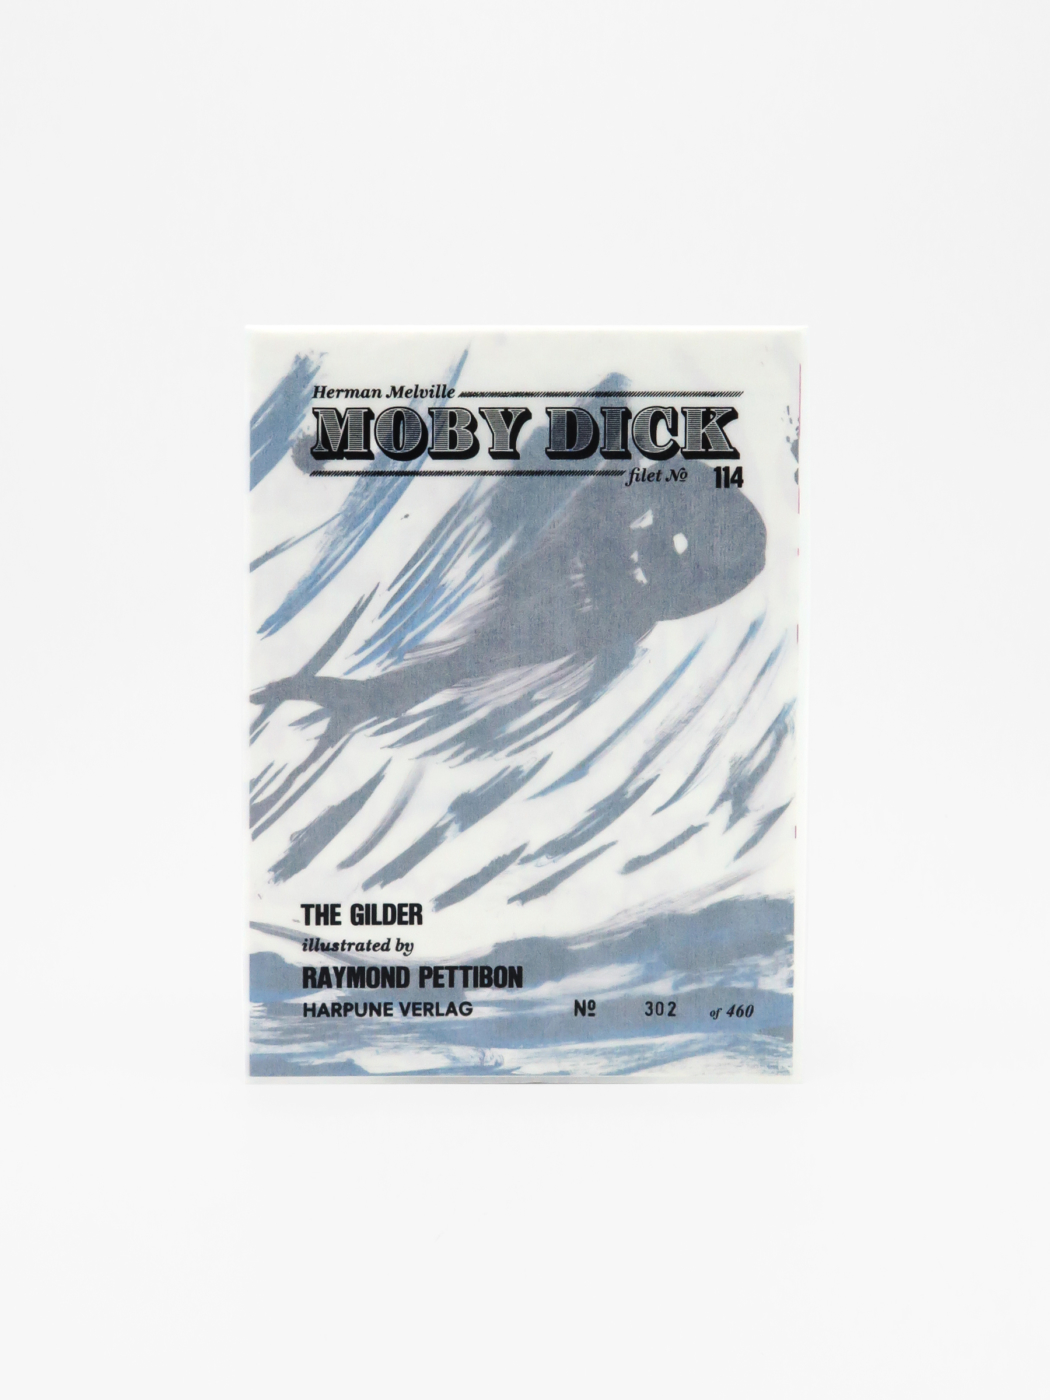 Herman Melville, Moby Dick Filet No. 114